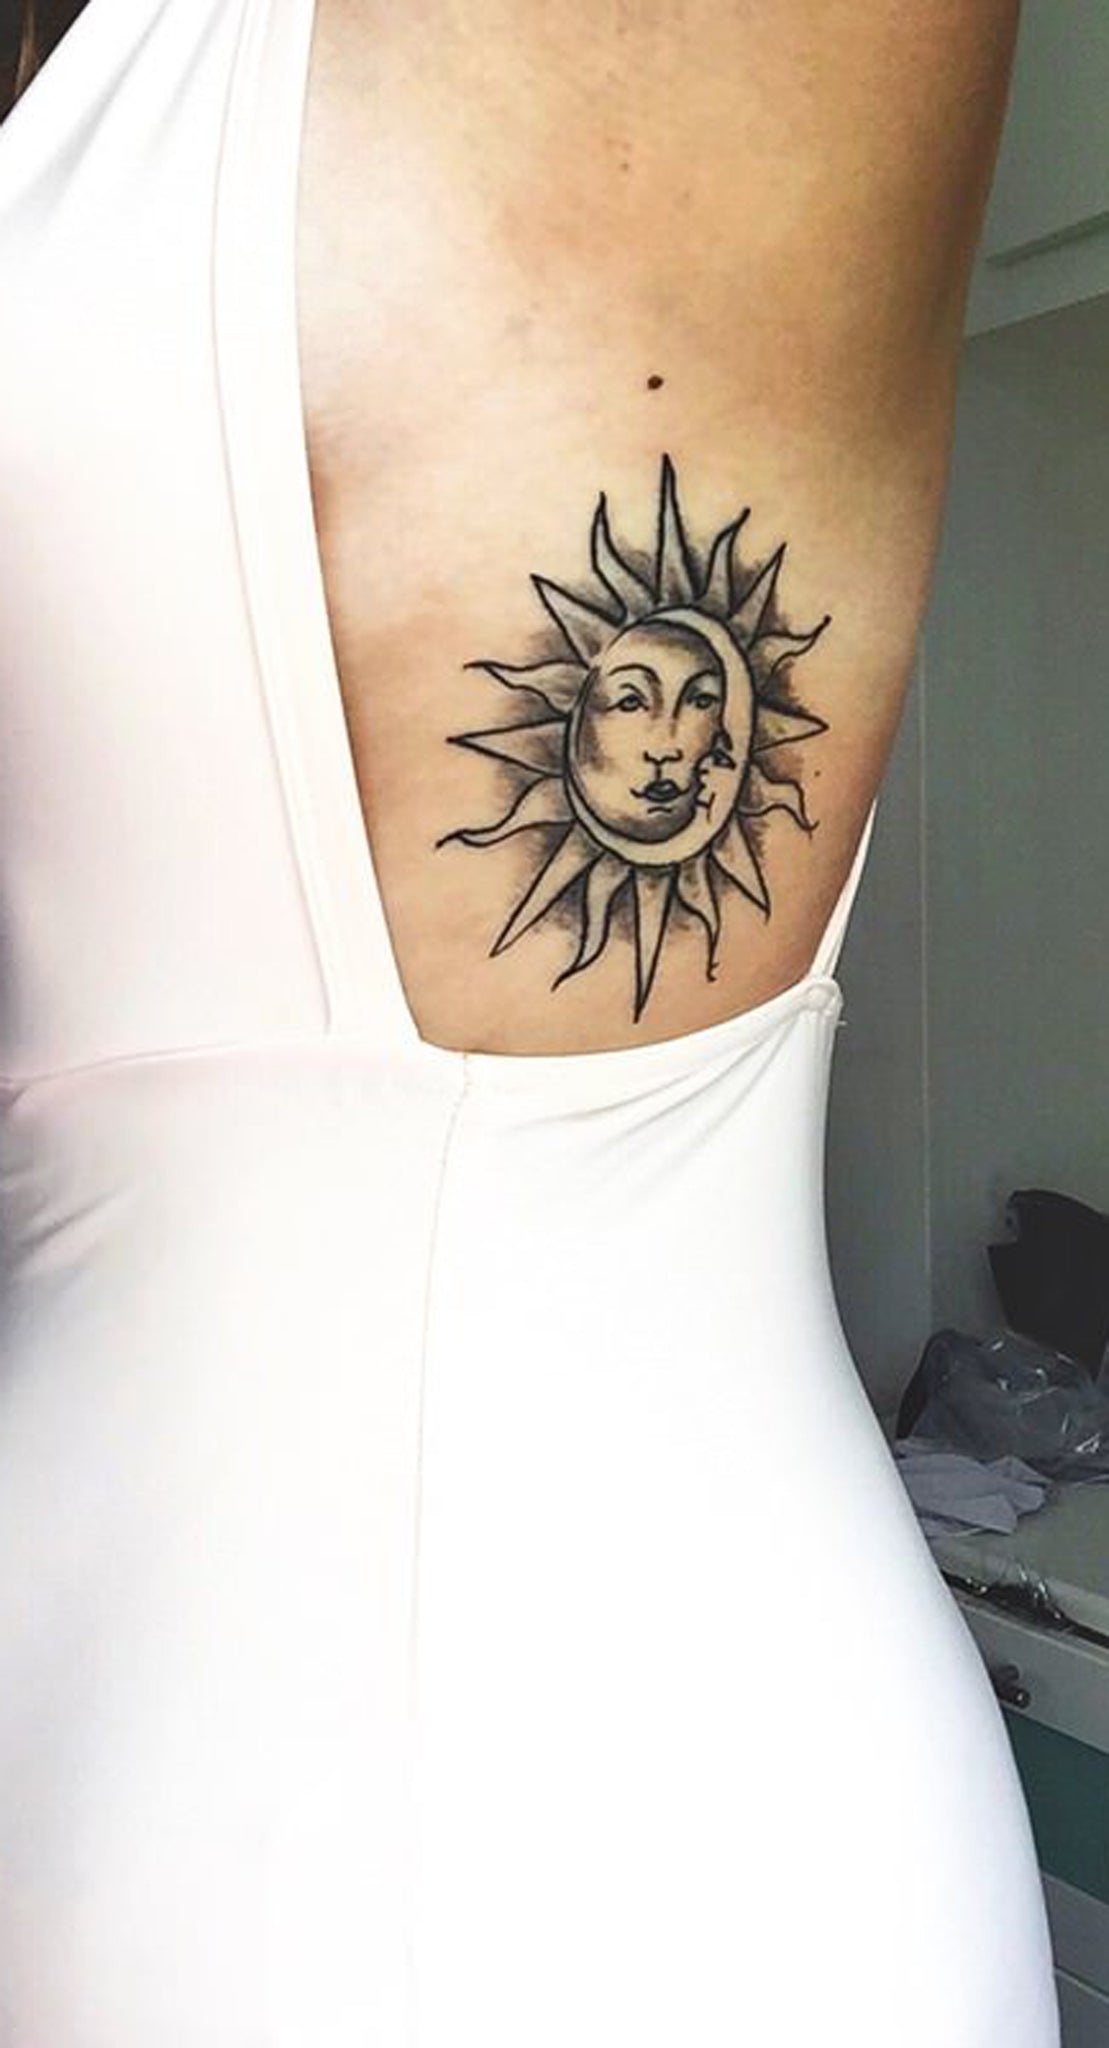 Bohemian Moon Sun Rib Tattoo Ideas for Women - Small Traditional Ancient ideias de tatuagem para mulheres - www.MyBodiArt.com